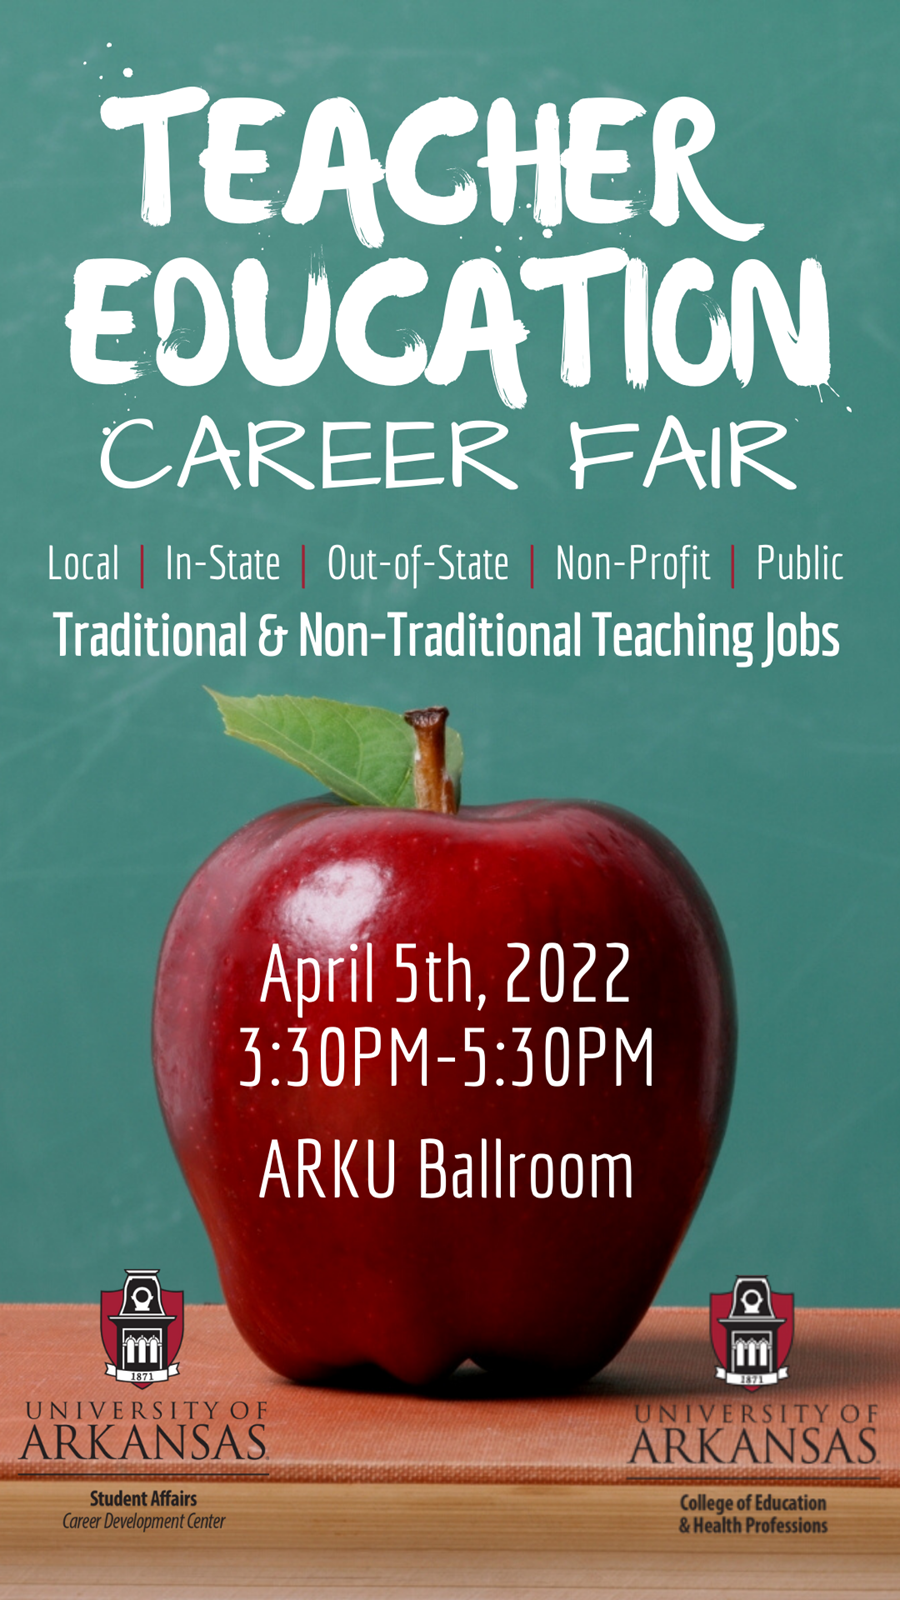 Looking for Teaching Jobs? Attend the Teacher Education Career Fair Tomorrow!